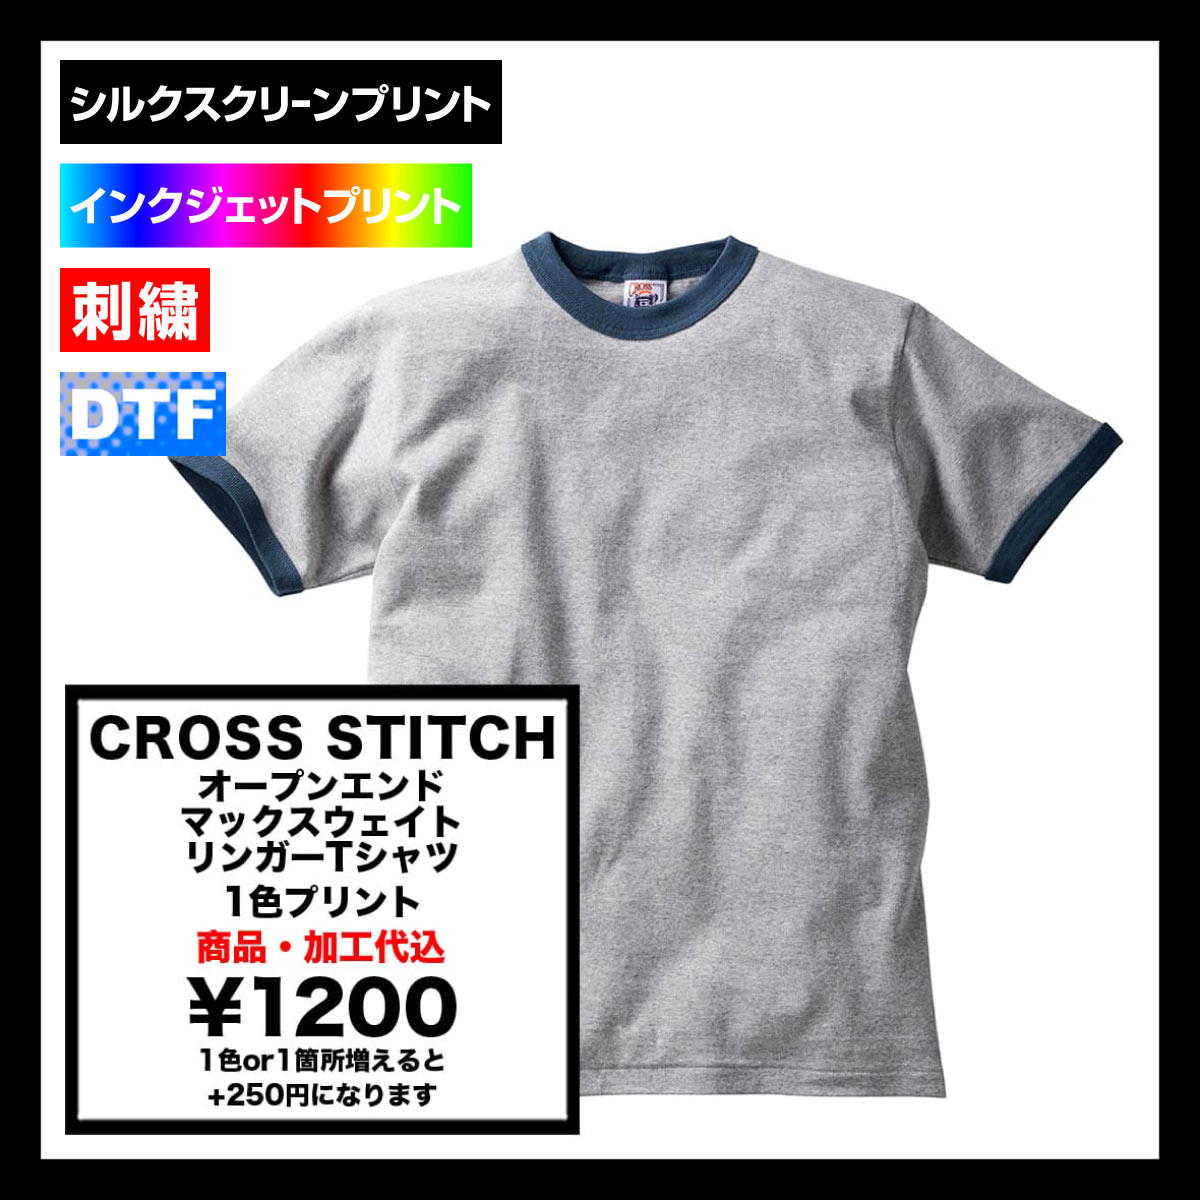 CROSS STITCH クロススティッチ 6.2 oz オープンエンド マックスウェイト リンガーTシャツ (品番OE1121)